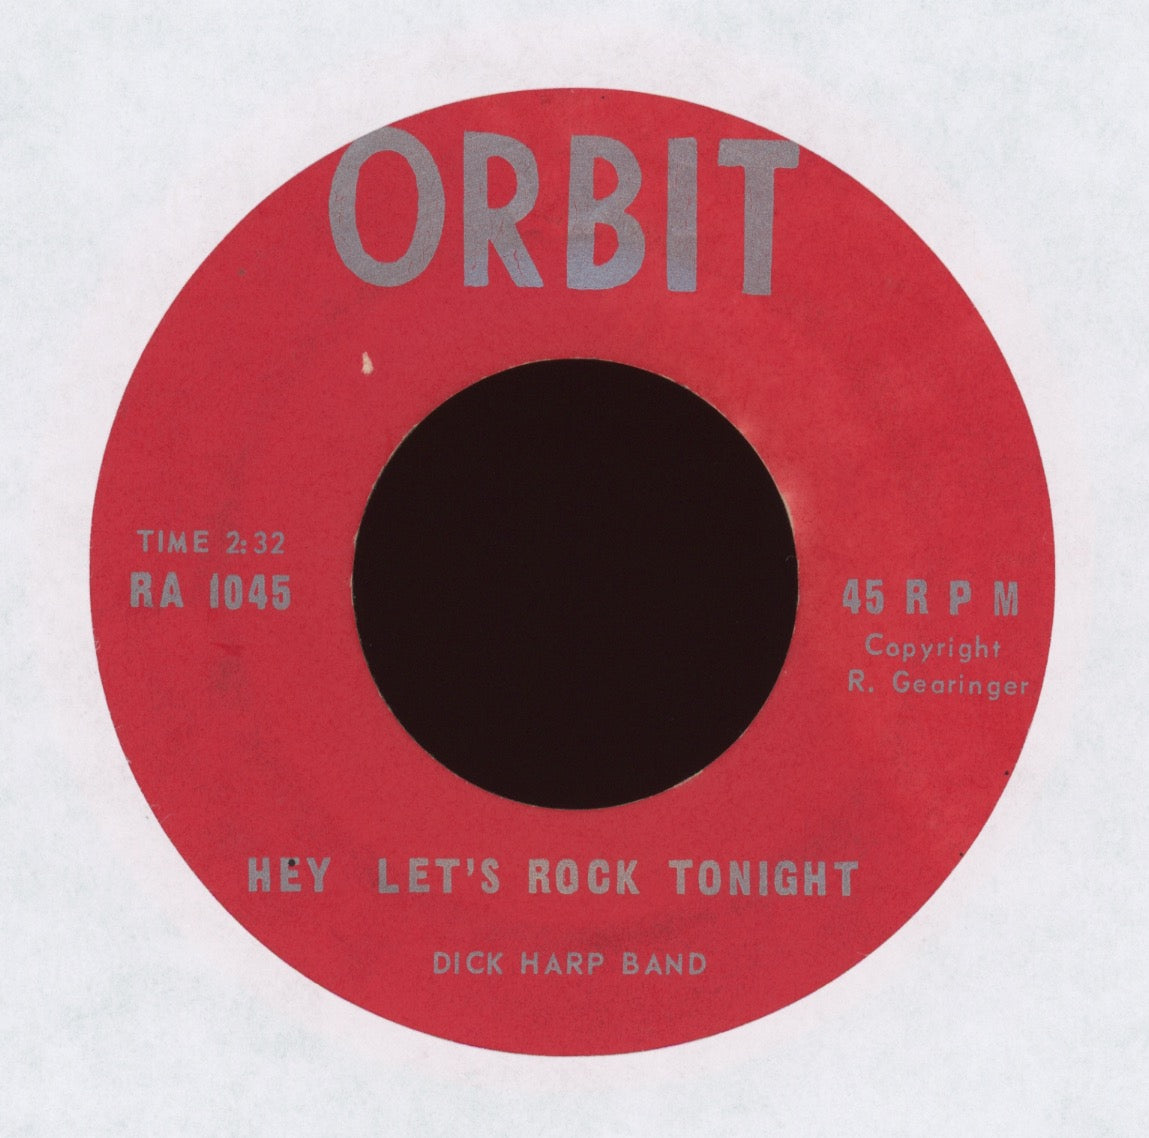 Dick Harp - Hey Let's Rock Tonight on Orbit